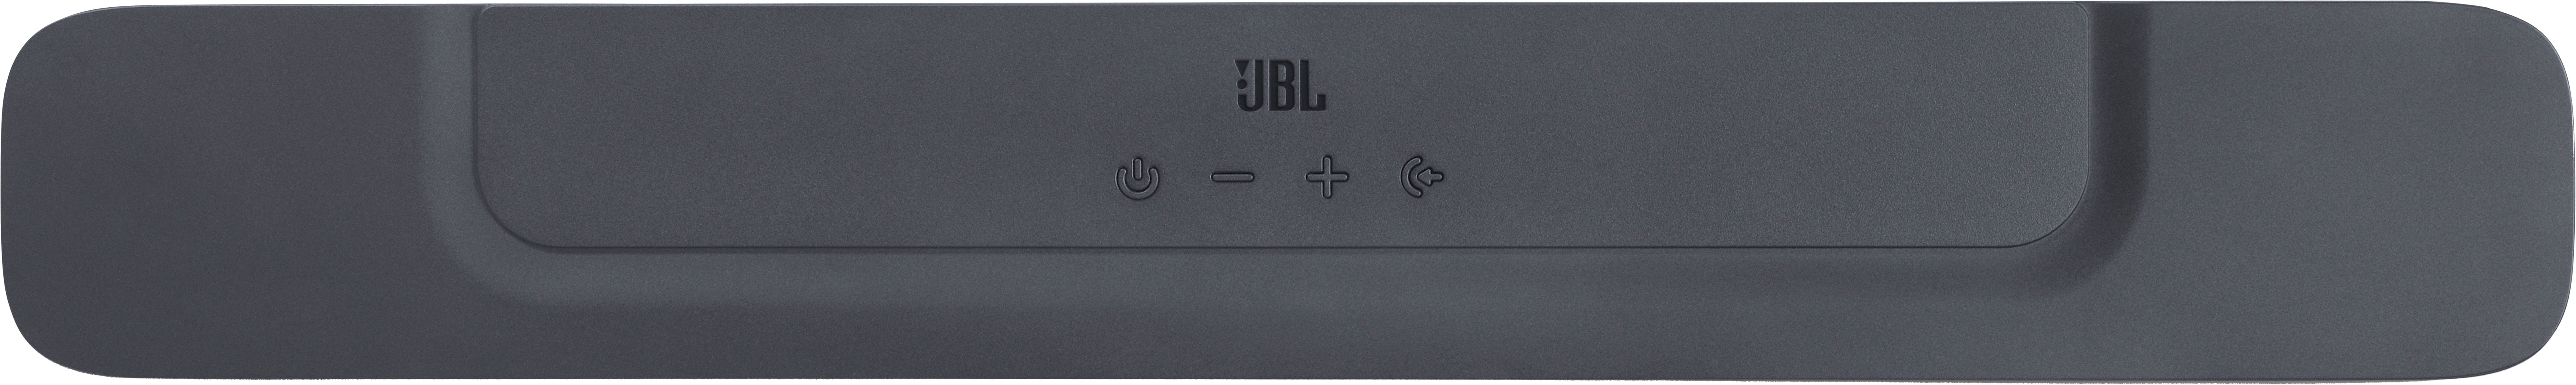 JBLBAR20AIOM2BLKAM (MK2) JBL Black All-in-One - Buy 2.0 Channel Best Soundbar